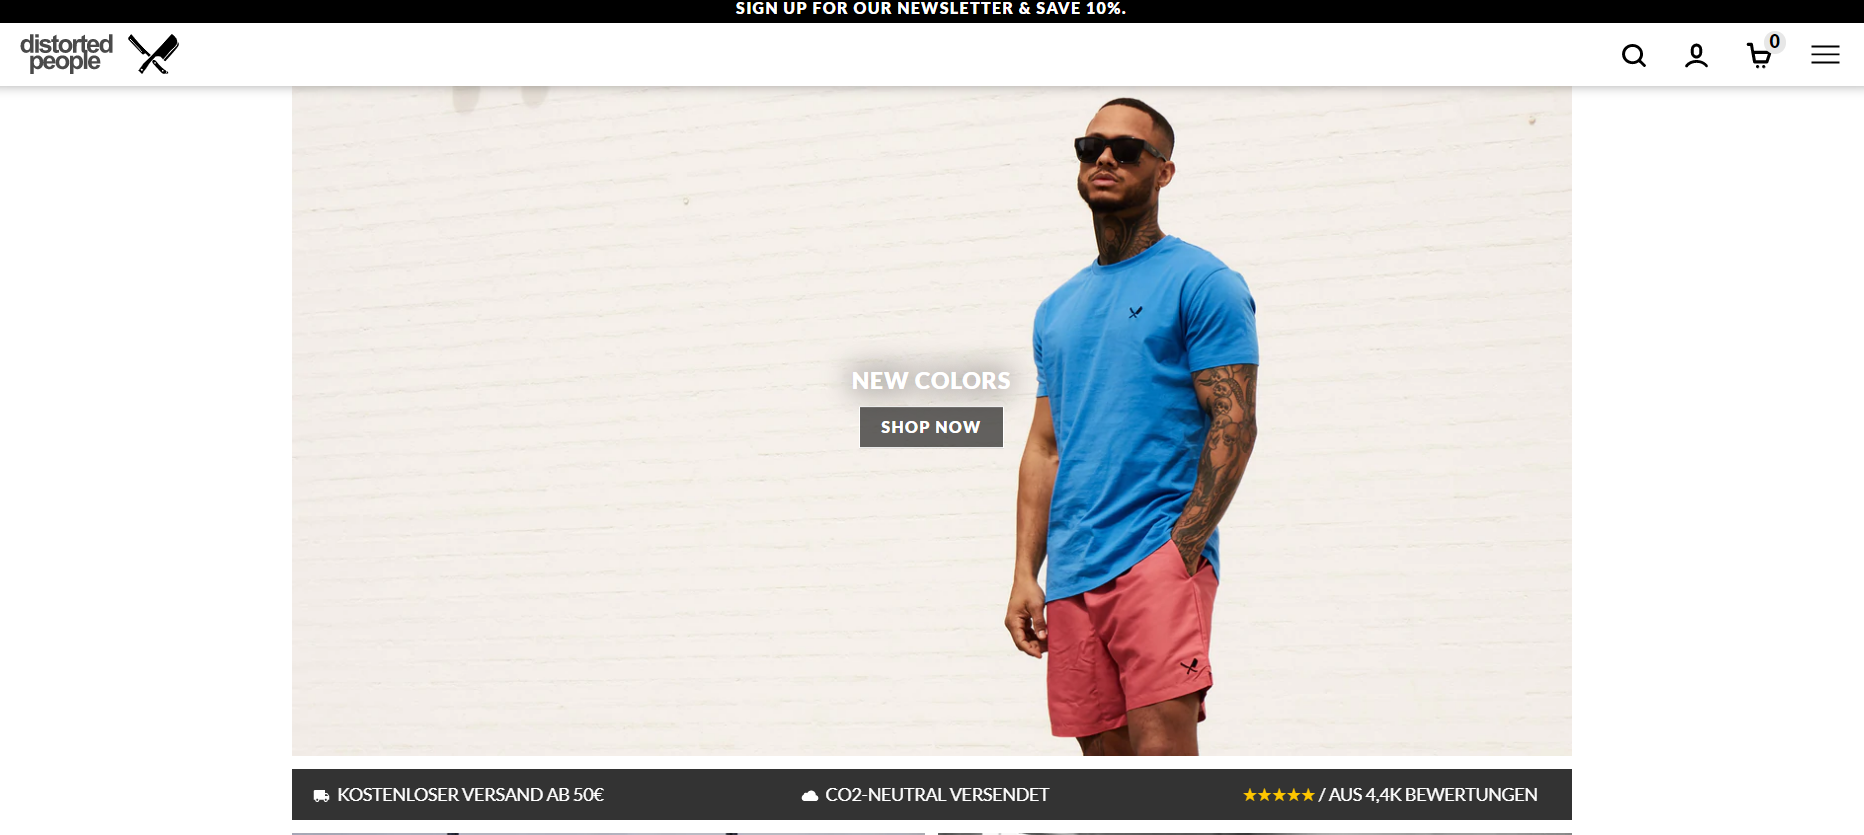 Die Website des Fashion E-Commerce distorted people. 